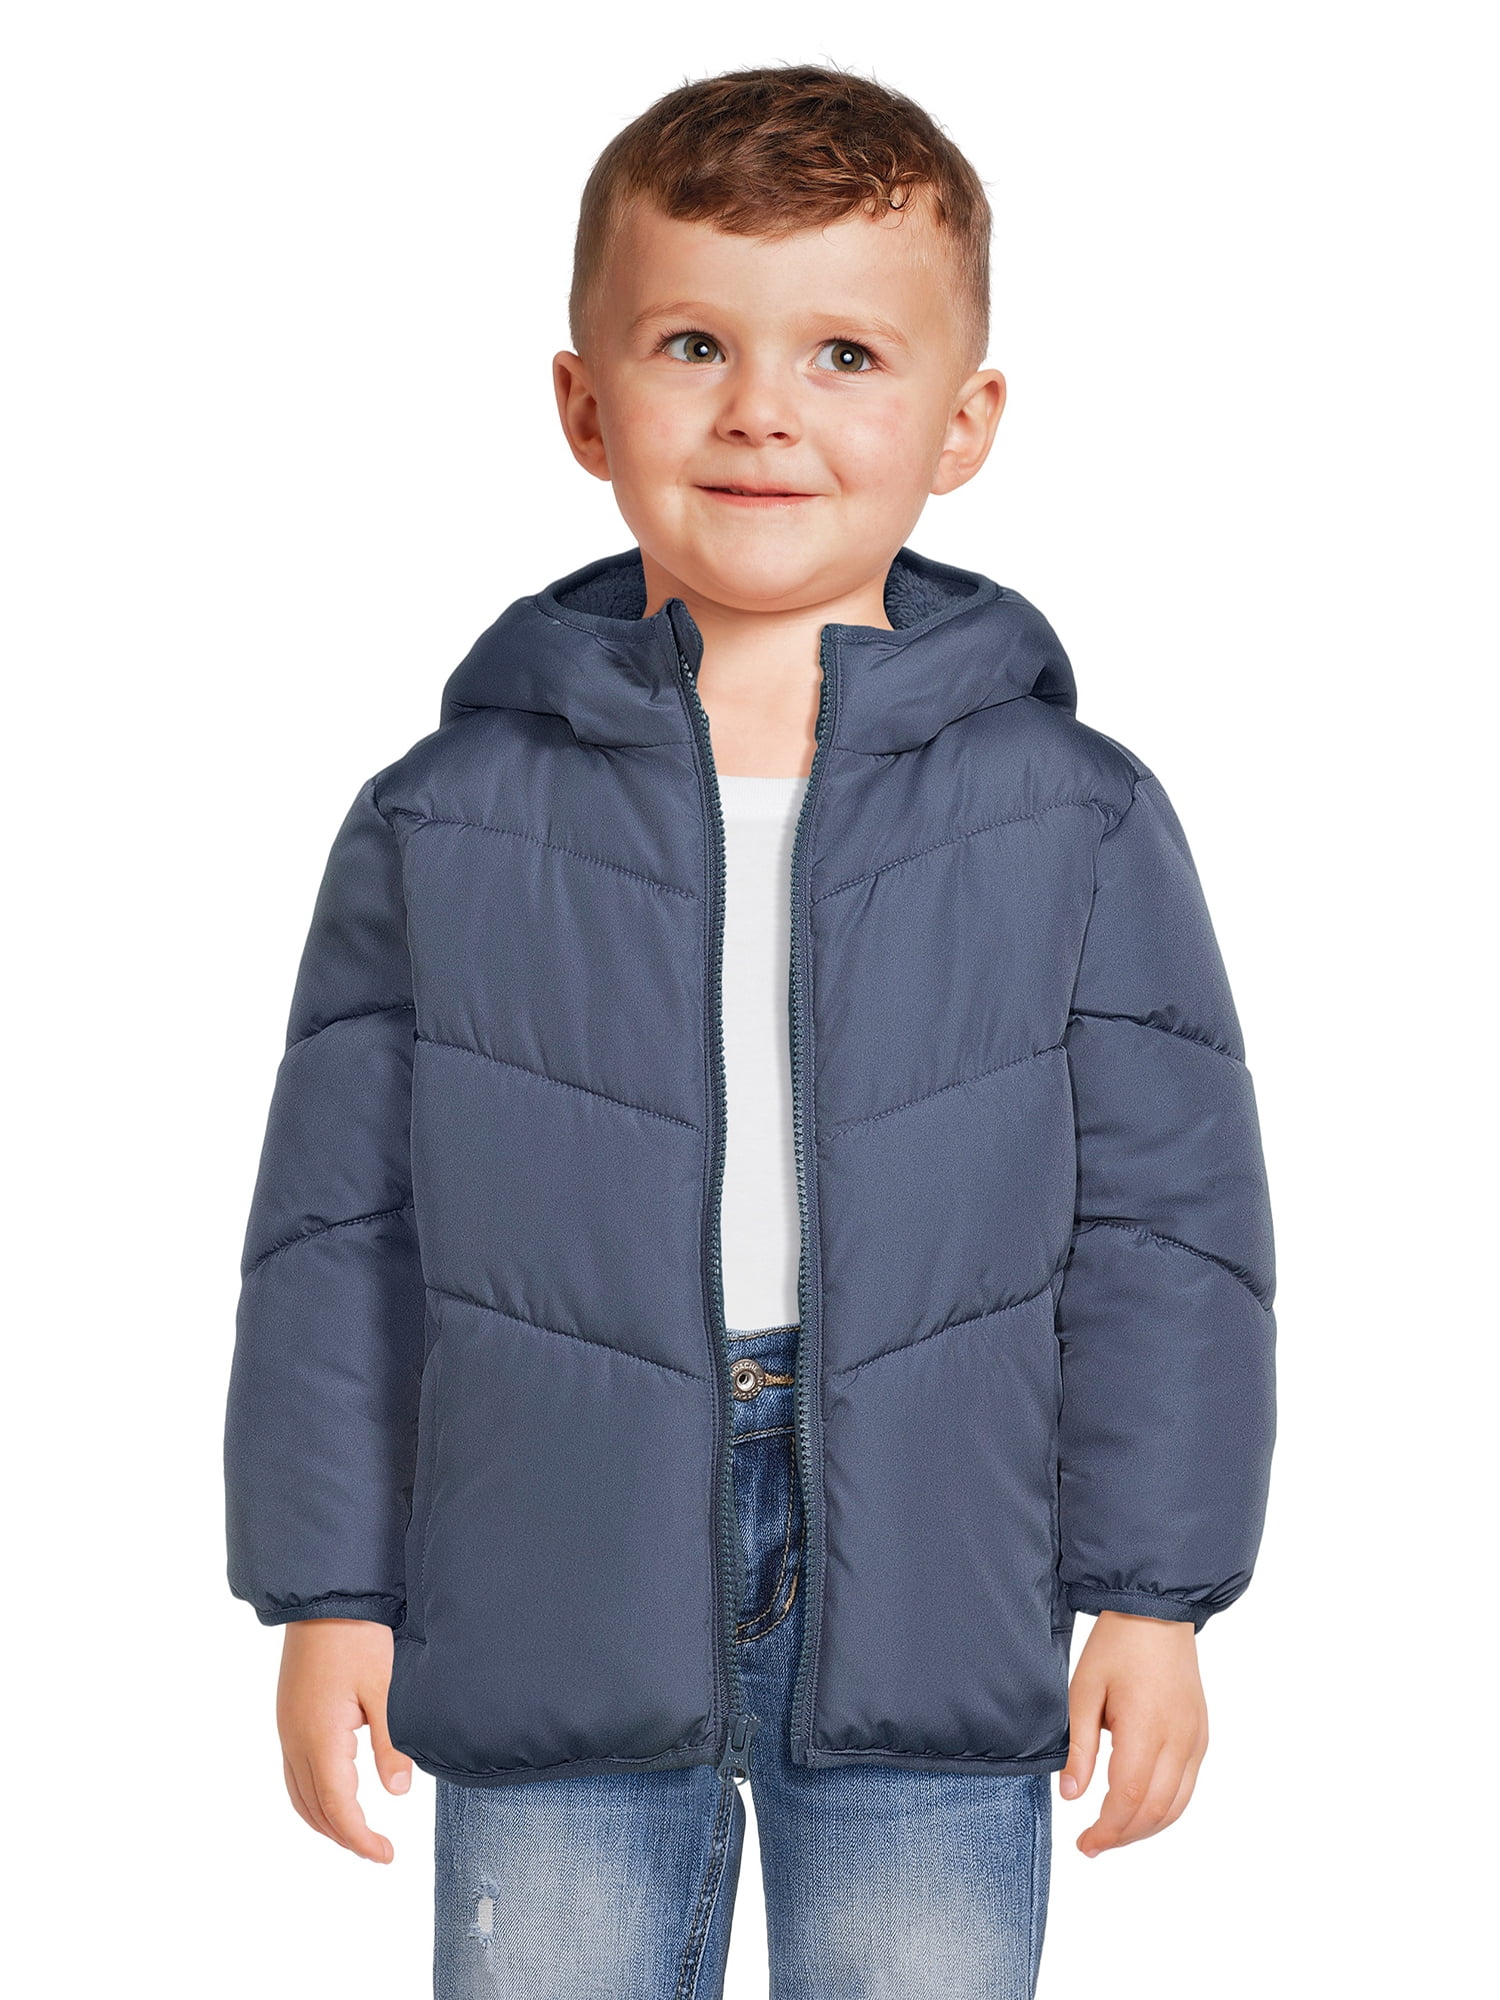 Swiss Tech Baby and Toddler Boy Heavyweight Puffer Jacket, Sizes 12M-5T ...